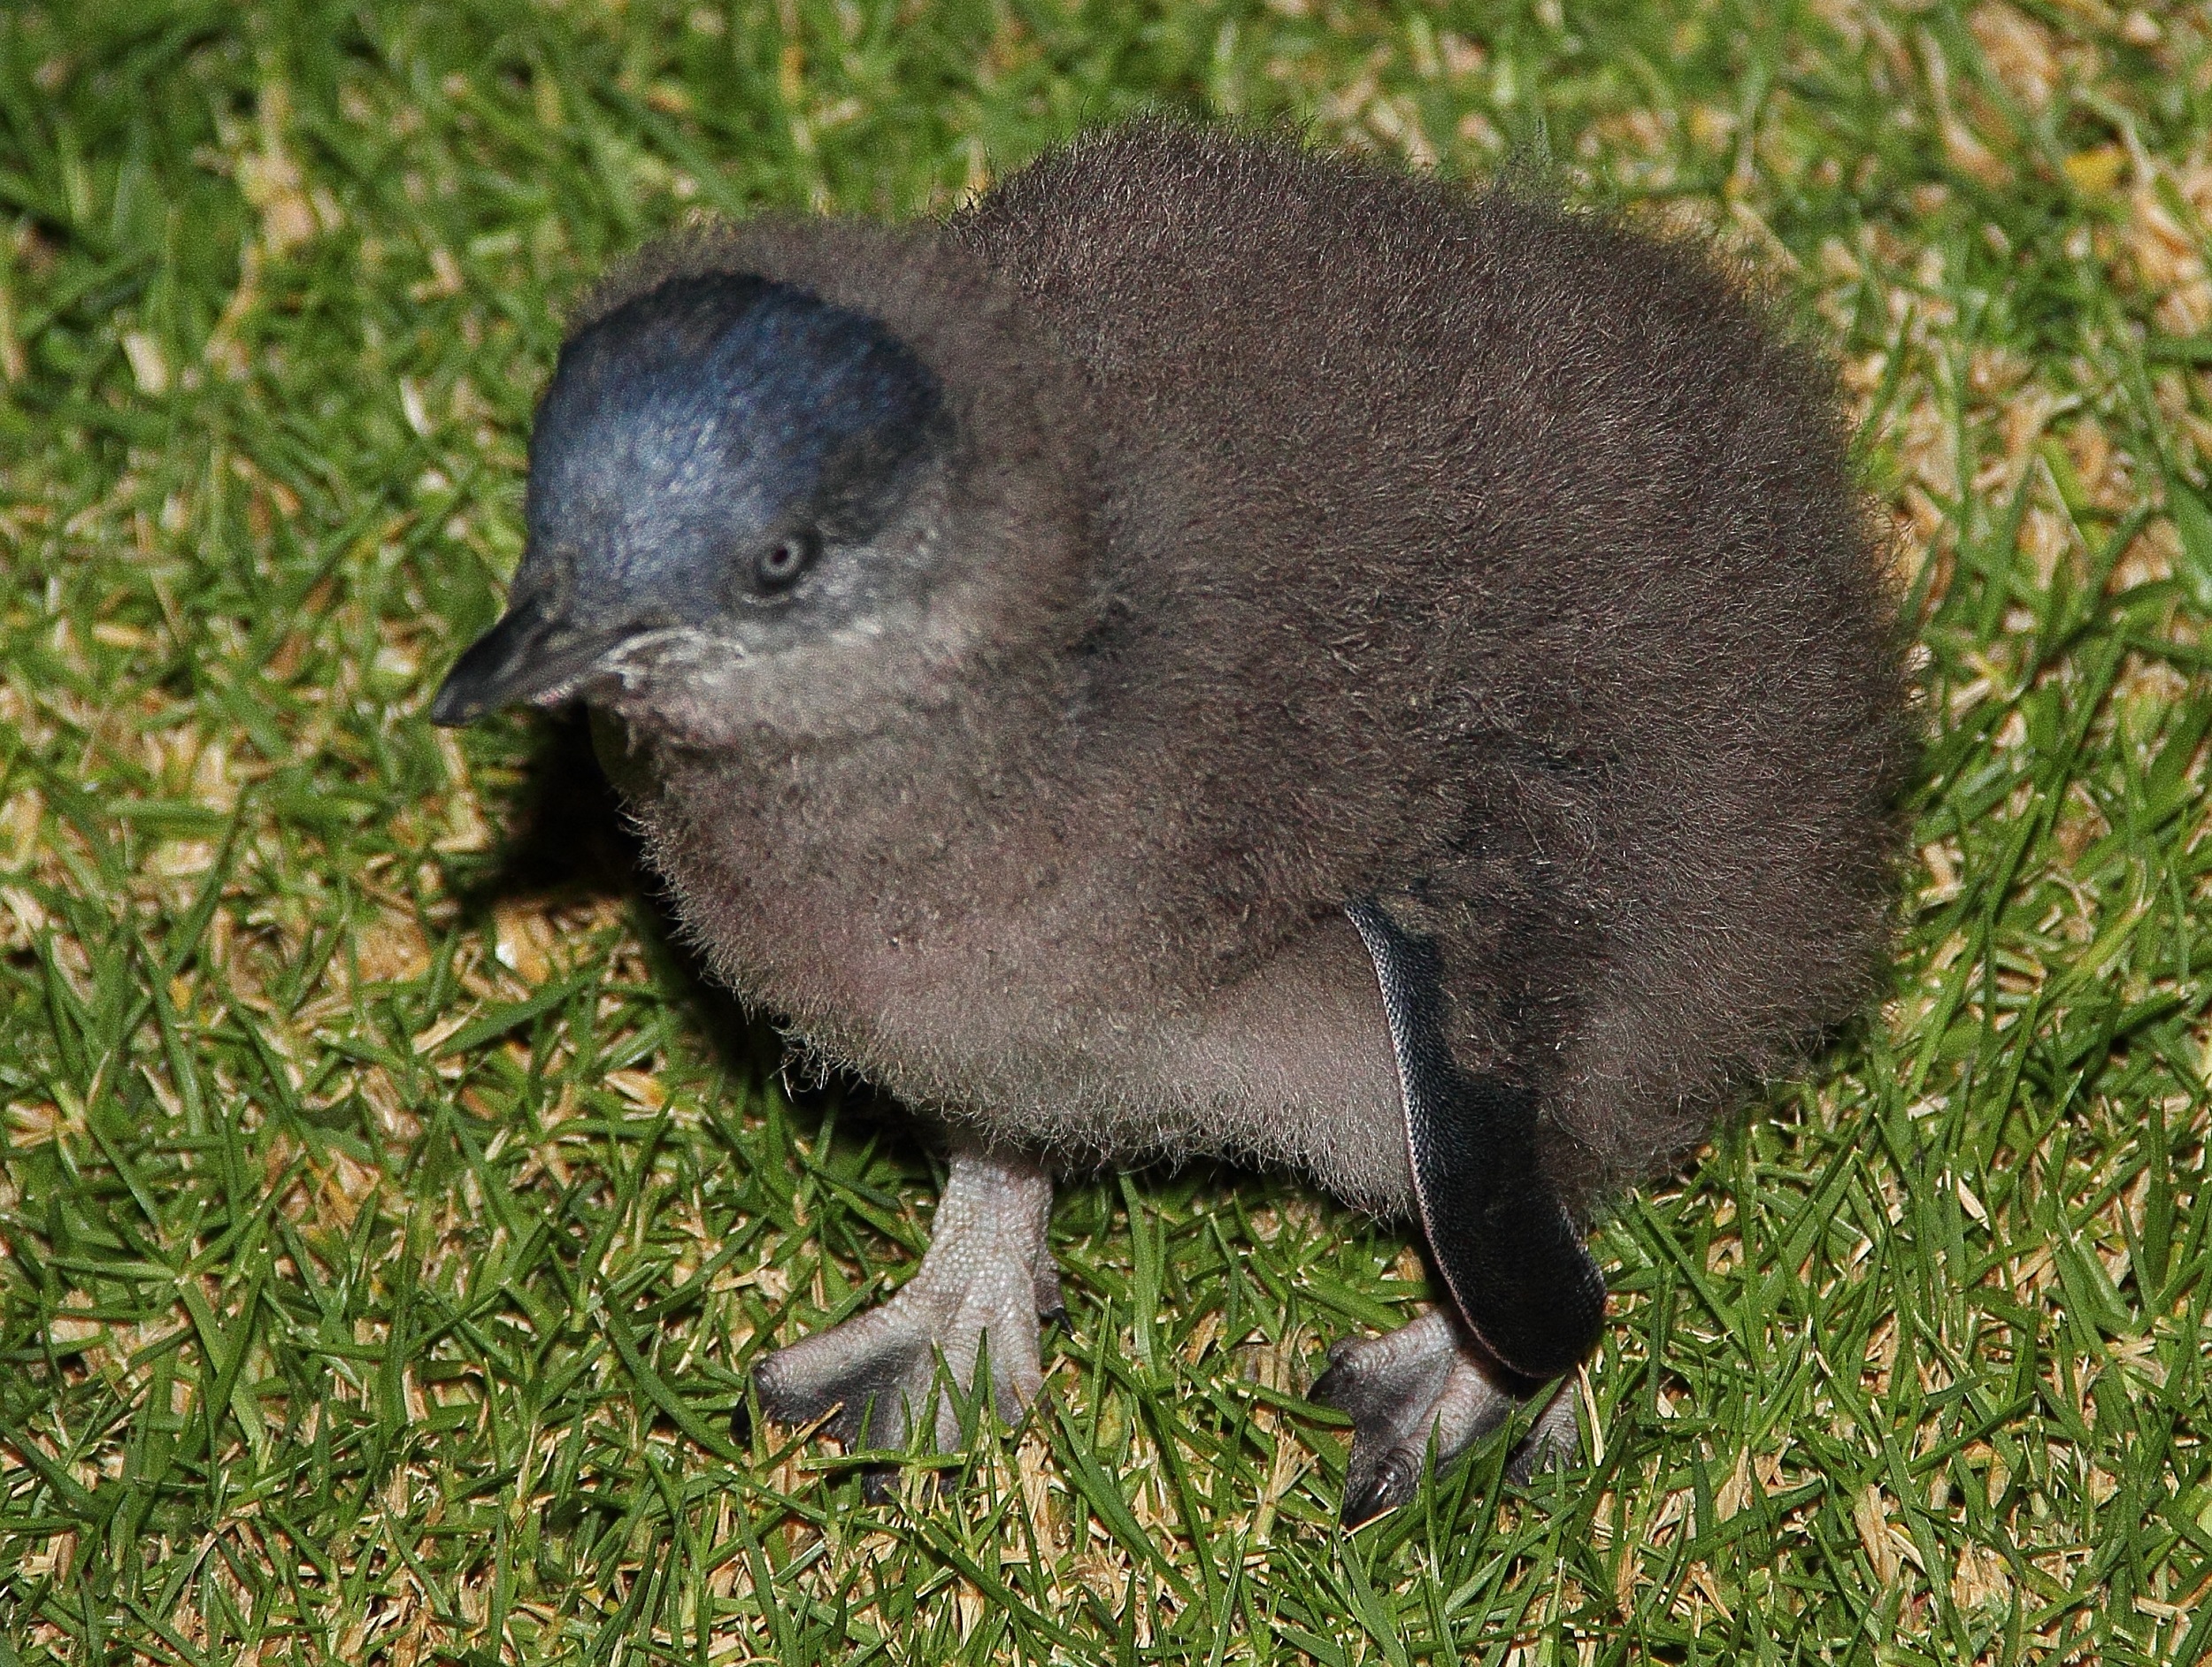 Little penguin chick Eudyptula minor. Photo Credit: